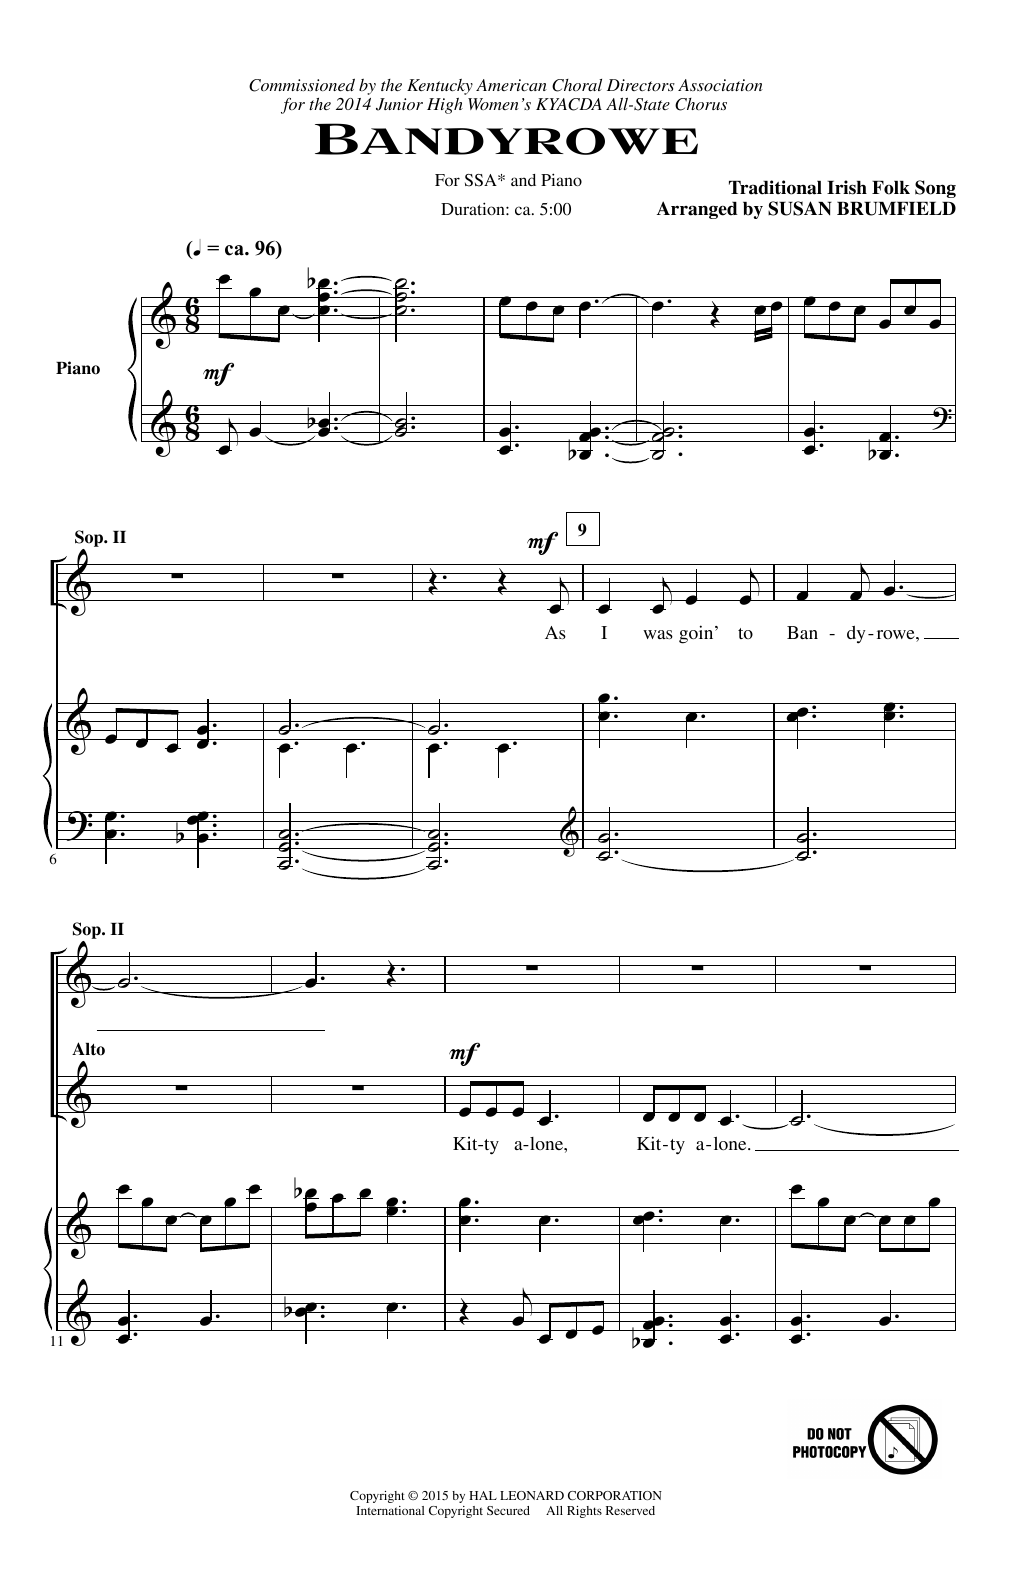 Traditional Irish Folk Song Bandyrowe (arr. Susan Brumfield) Sheet Music Notes & Chords for SSA Choir - Download or Print PDF